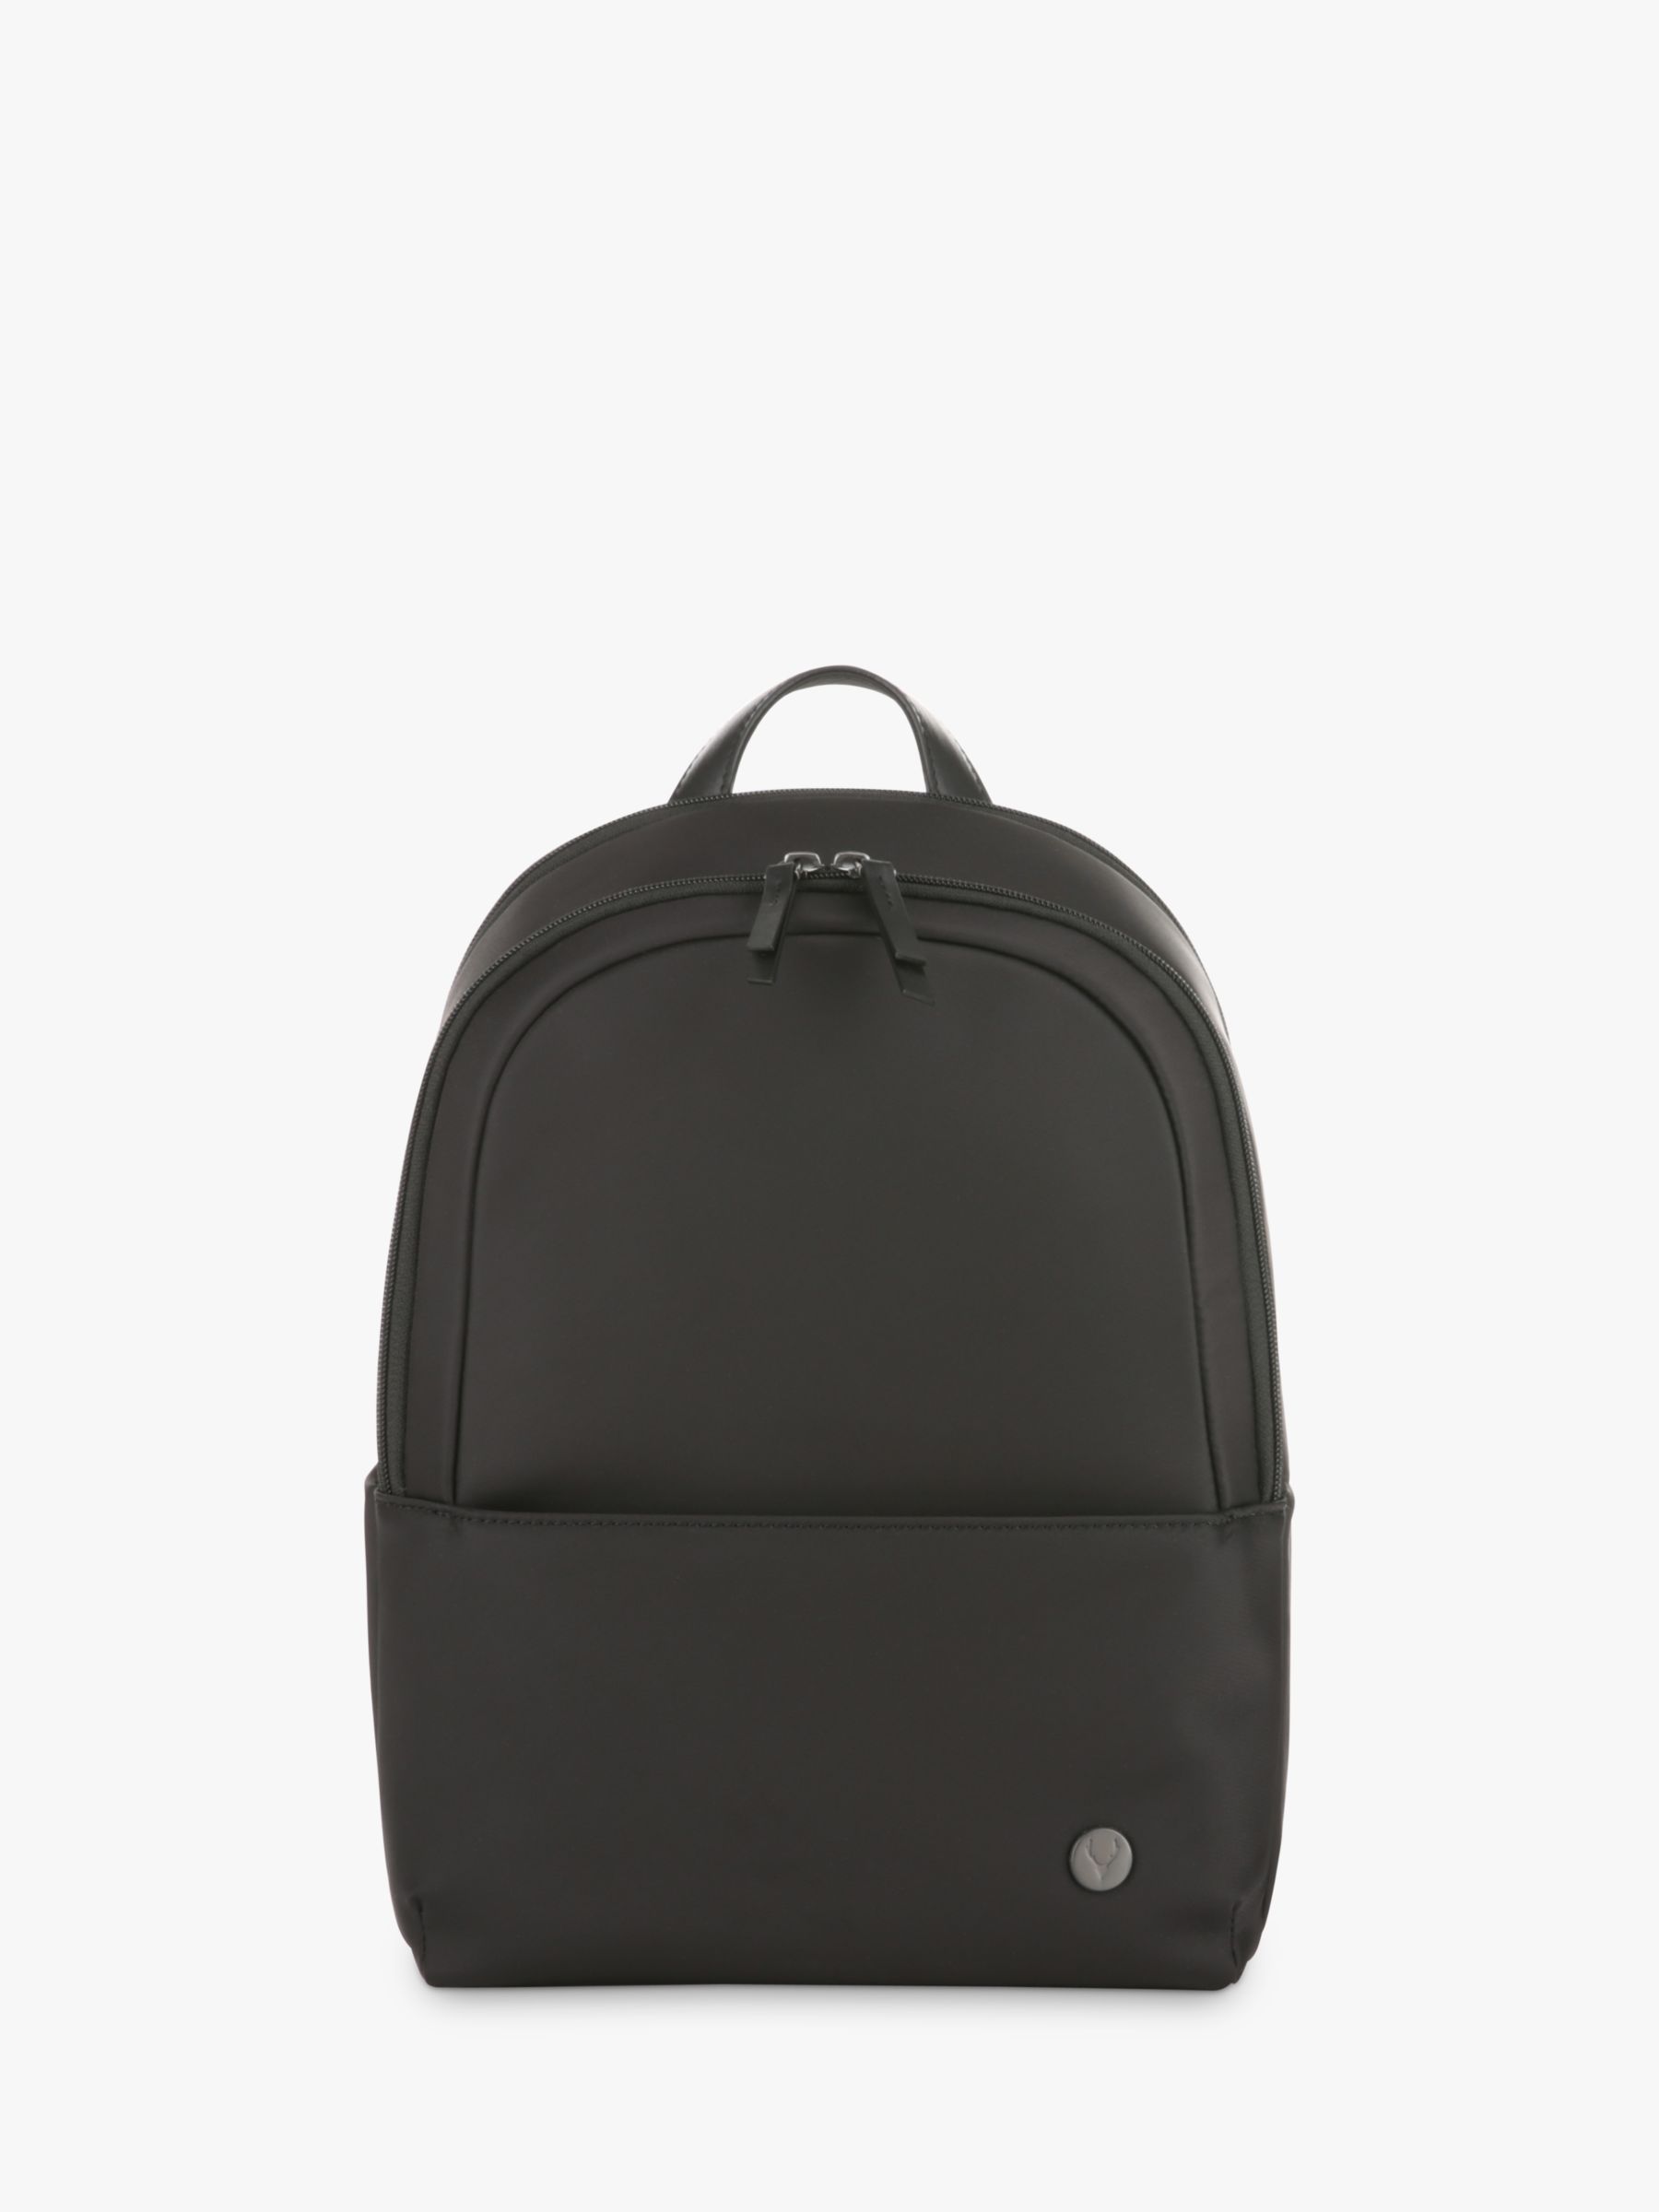 antler chelsea backpack